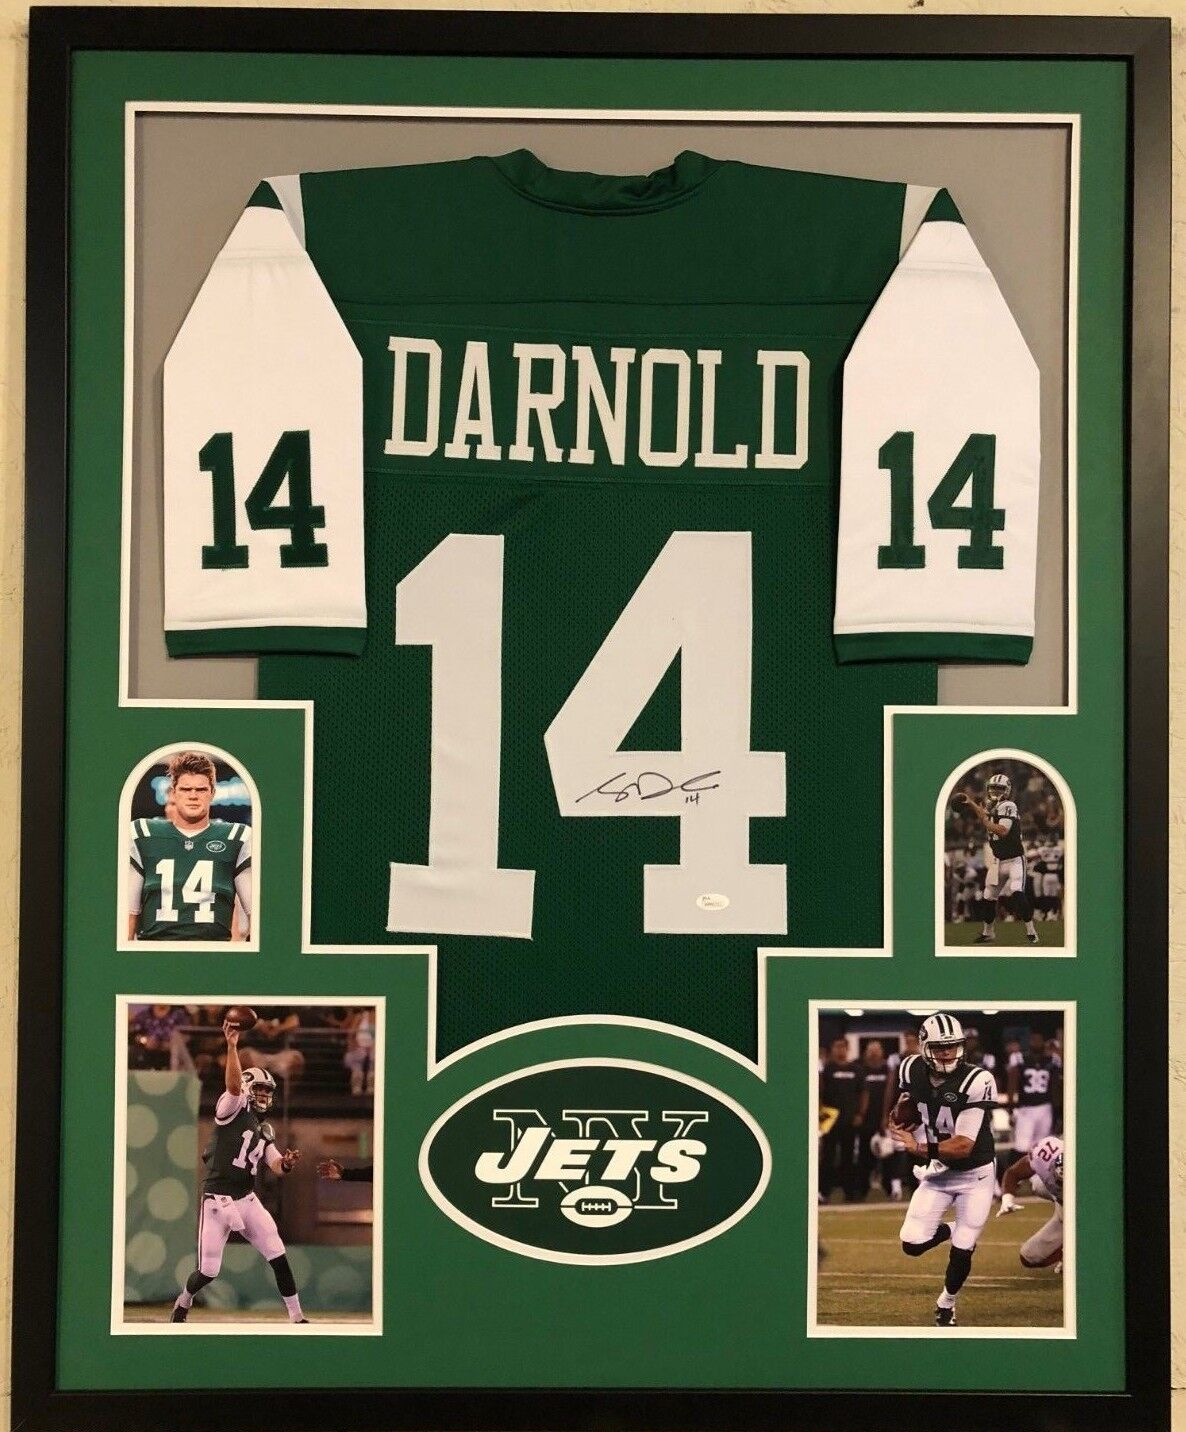 MVP Authentics Framed New York Jets Sam Darnold Autographed Signed Jersey Jsa Coa 540 sports jersey framing , jersey framing